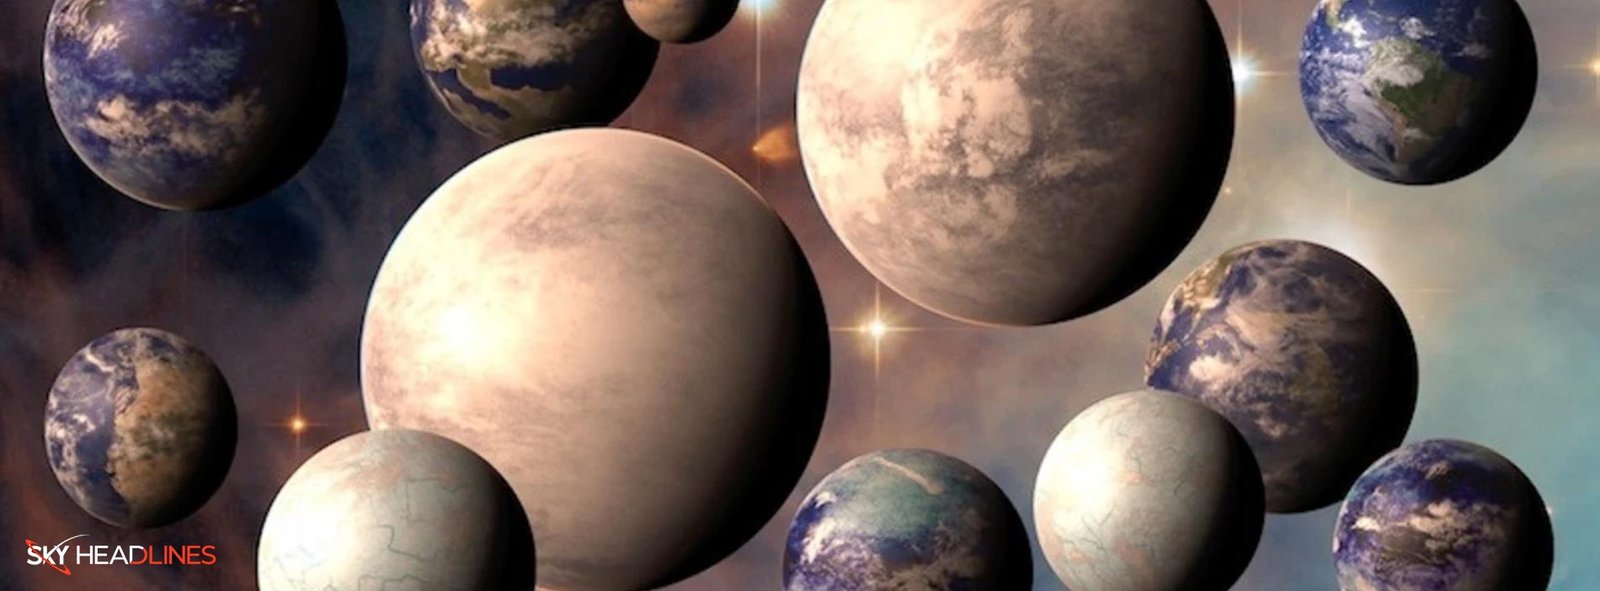 Earth-like Exoplanets